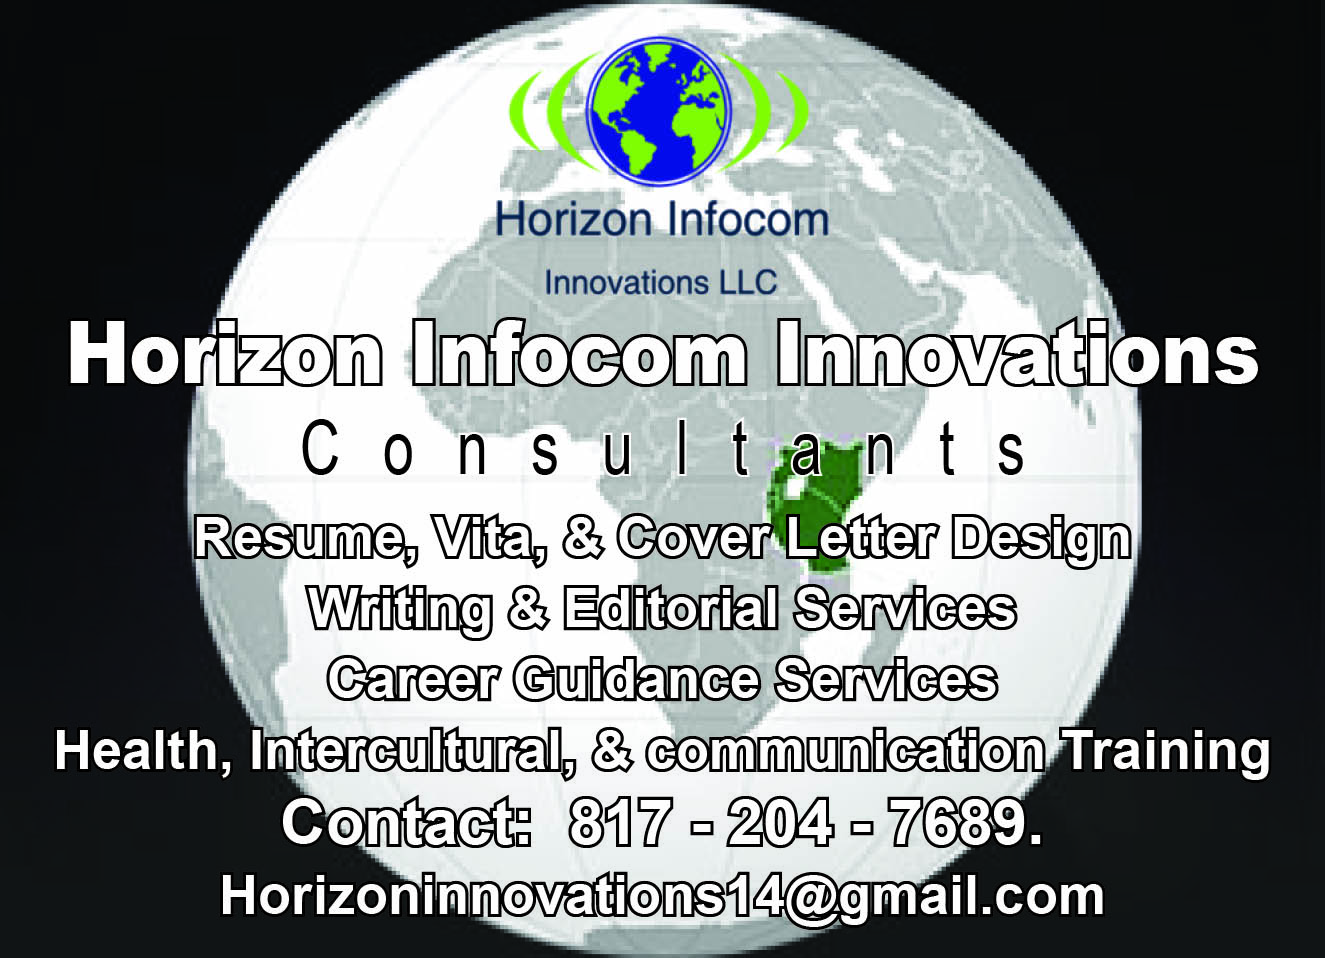 Horizon Innovations LLC